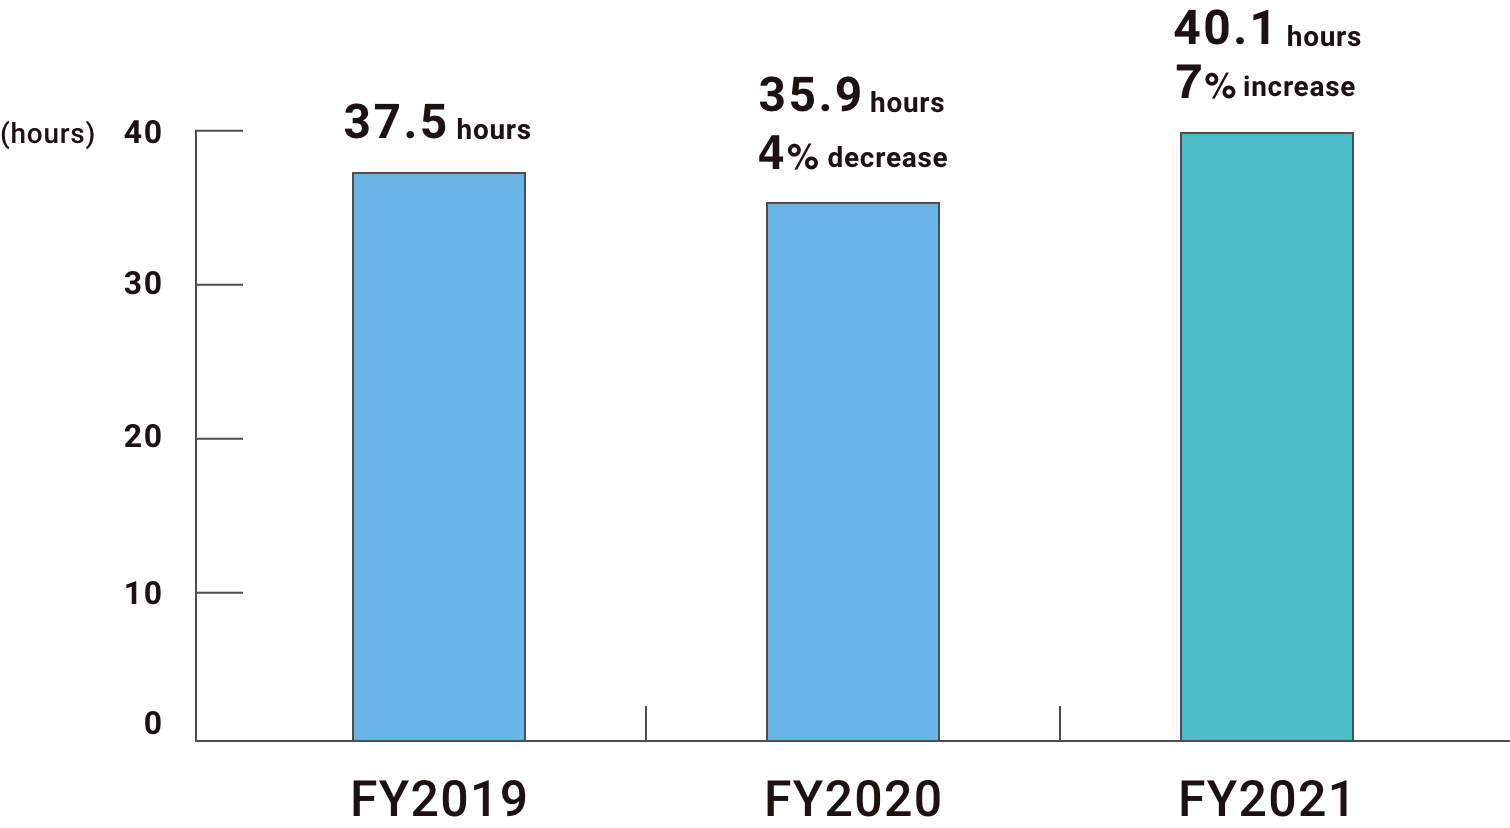 FY2019: 37.5 hours, FY2020: 35.9 hours (4% decrease), FY2021: 40.1 hours (7% increase)